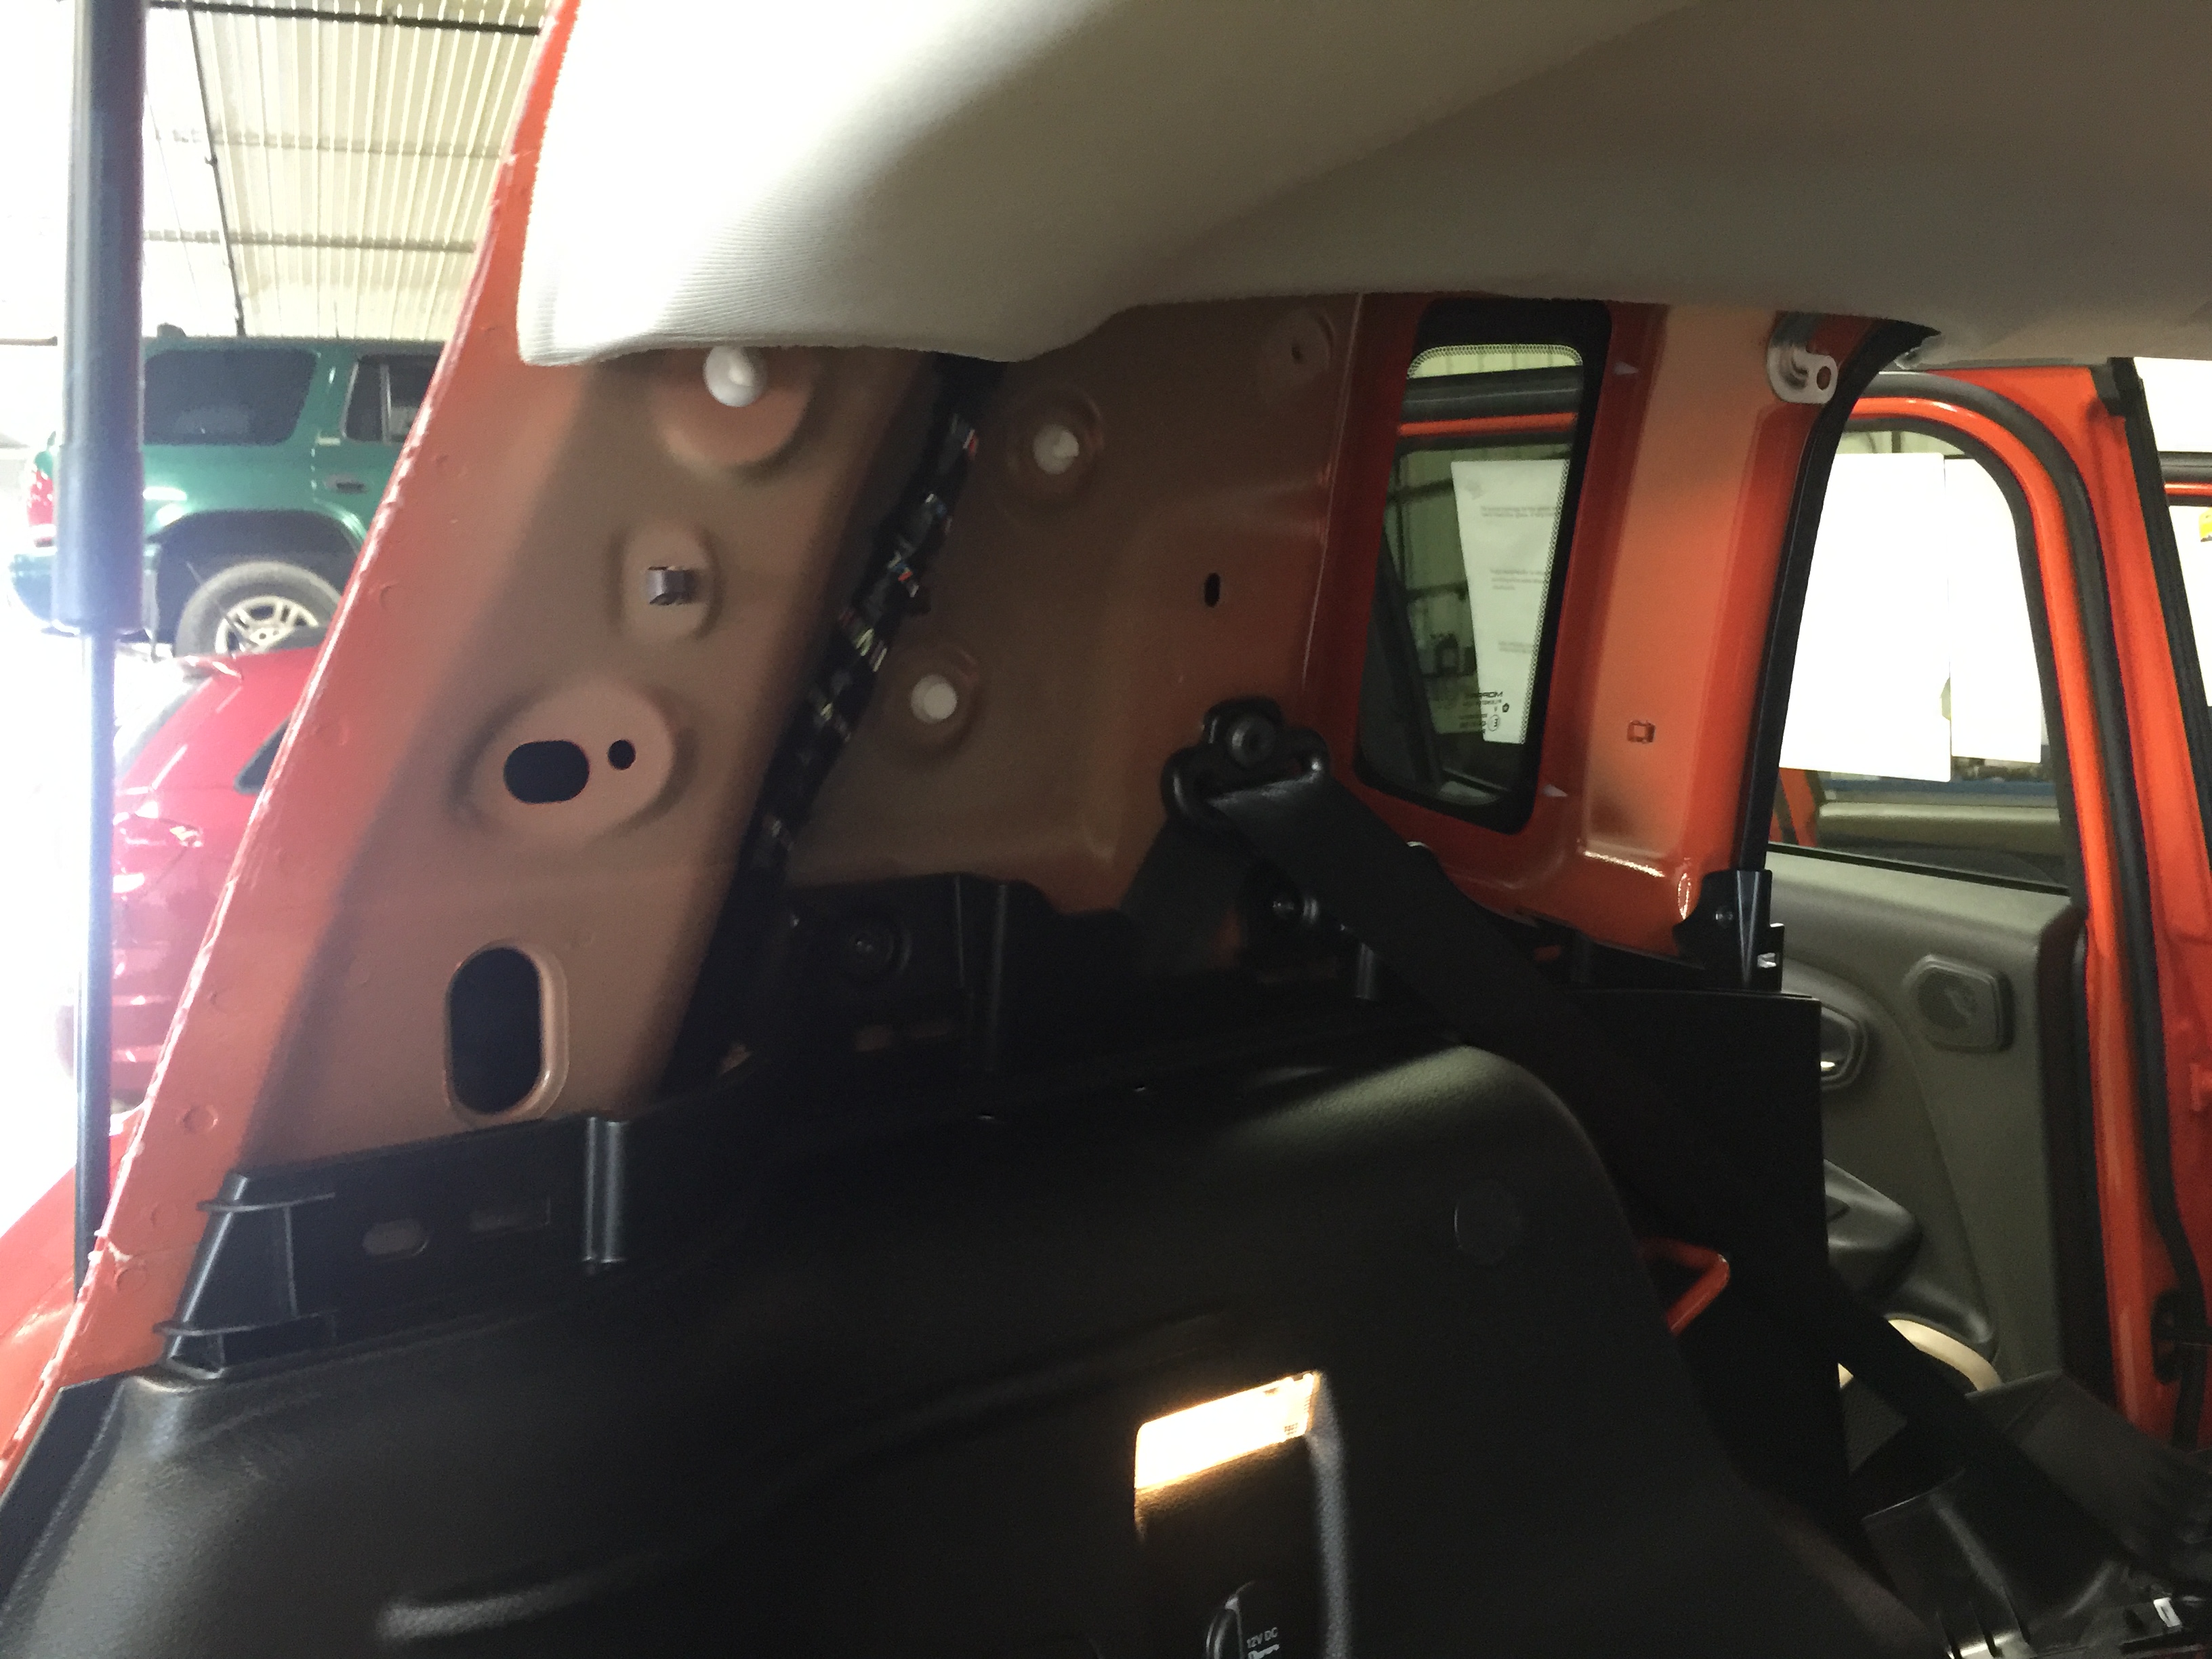 http://217dent.com 2016 Jeep Renegade Latitude Dent Repair, Hail Repair, Ding Repair, Springfield, IL. Decatur, IL. Taylorville, IL mobile dent repair